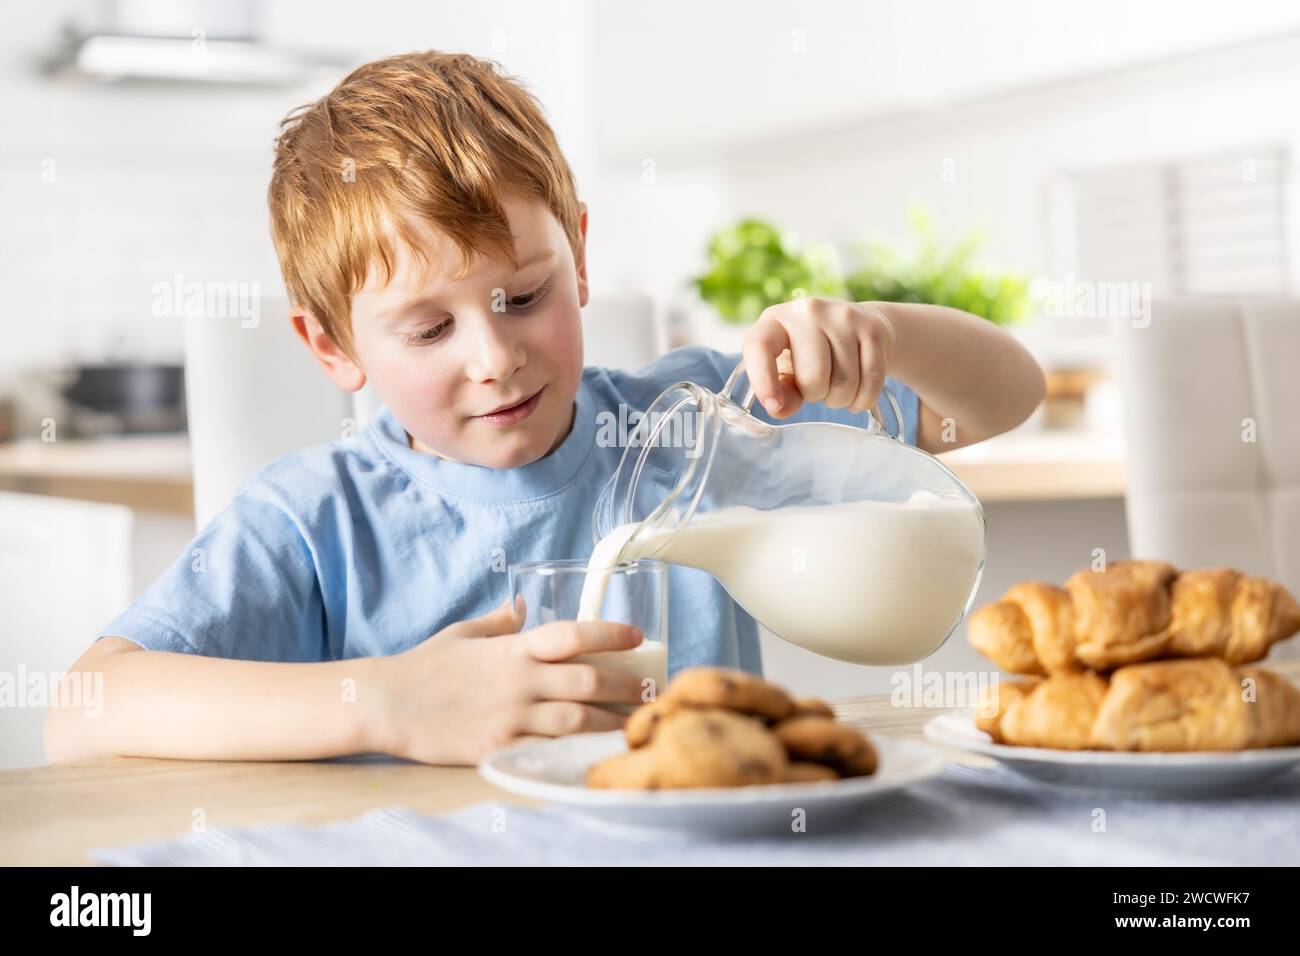 A little boy pours himself fresh milk during breakfast. Stock Photo